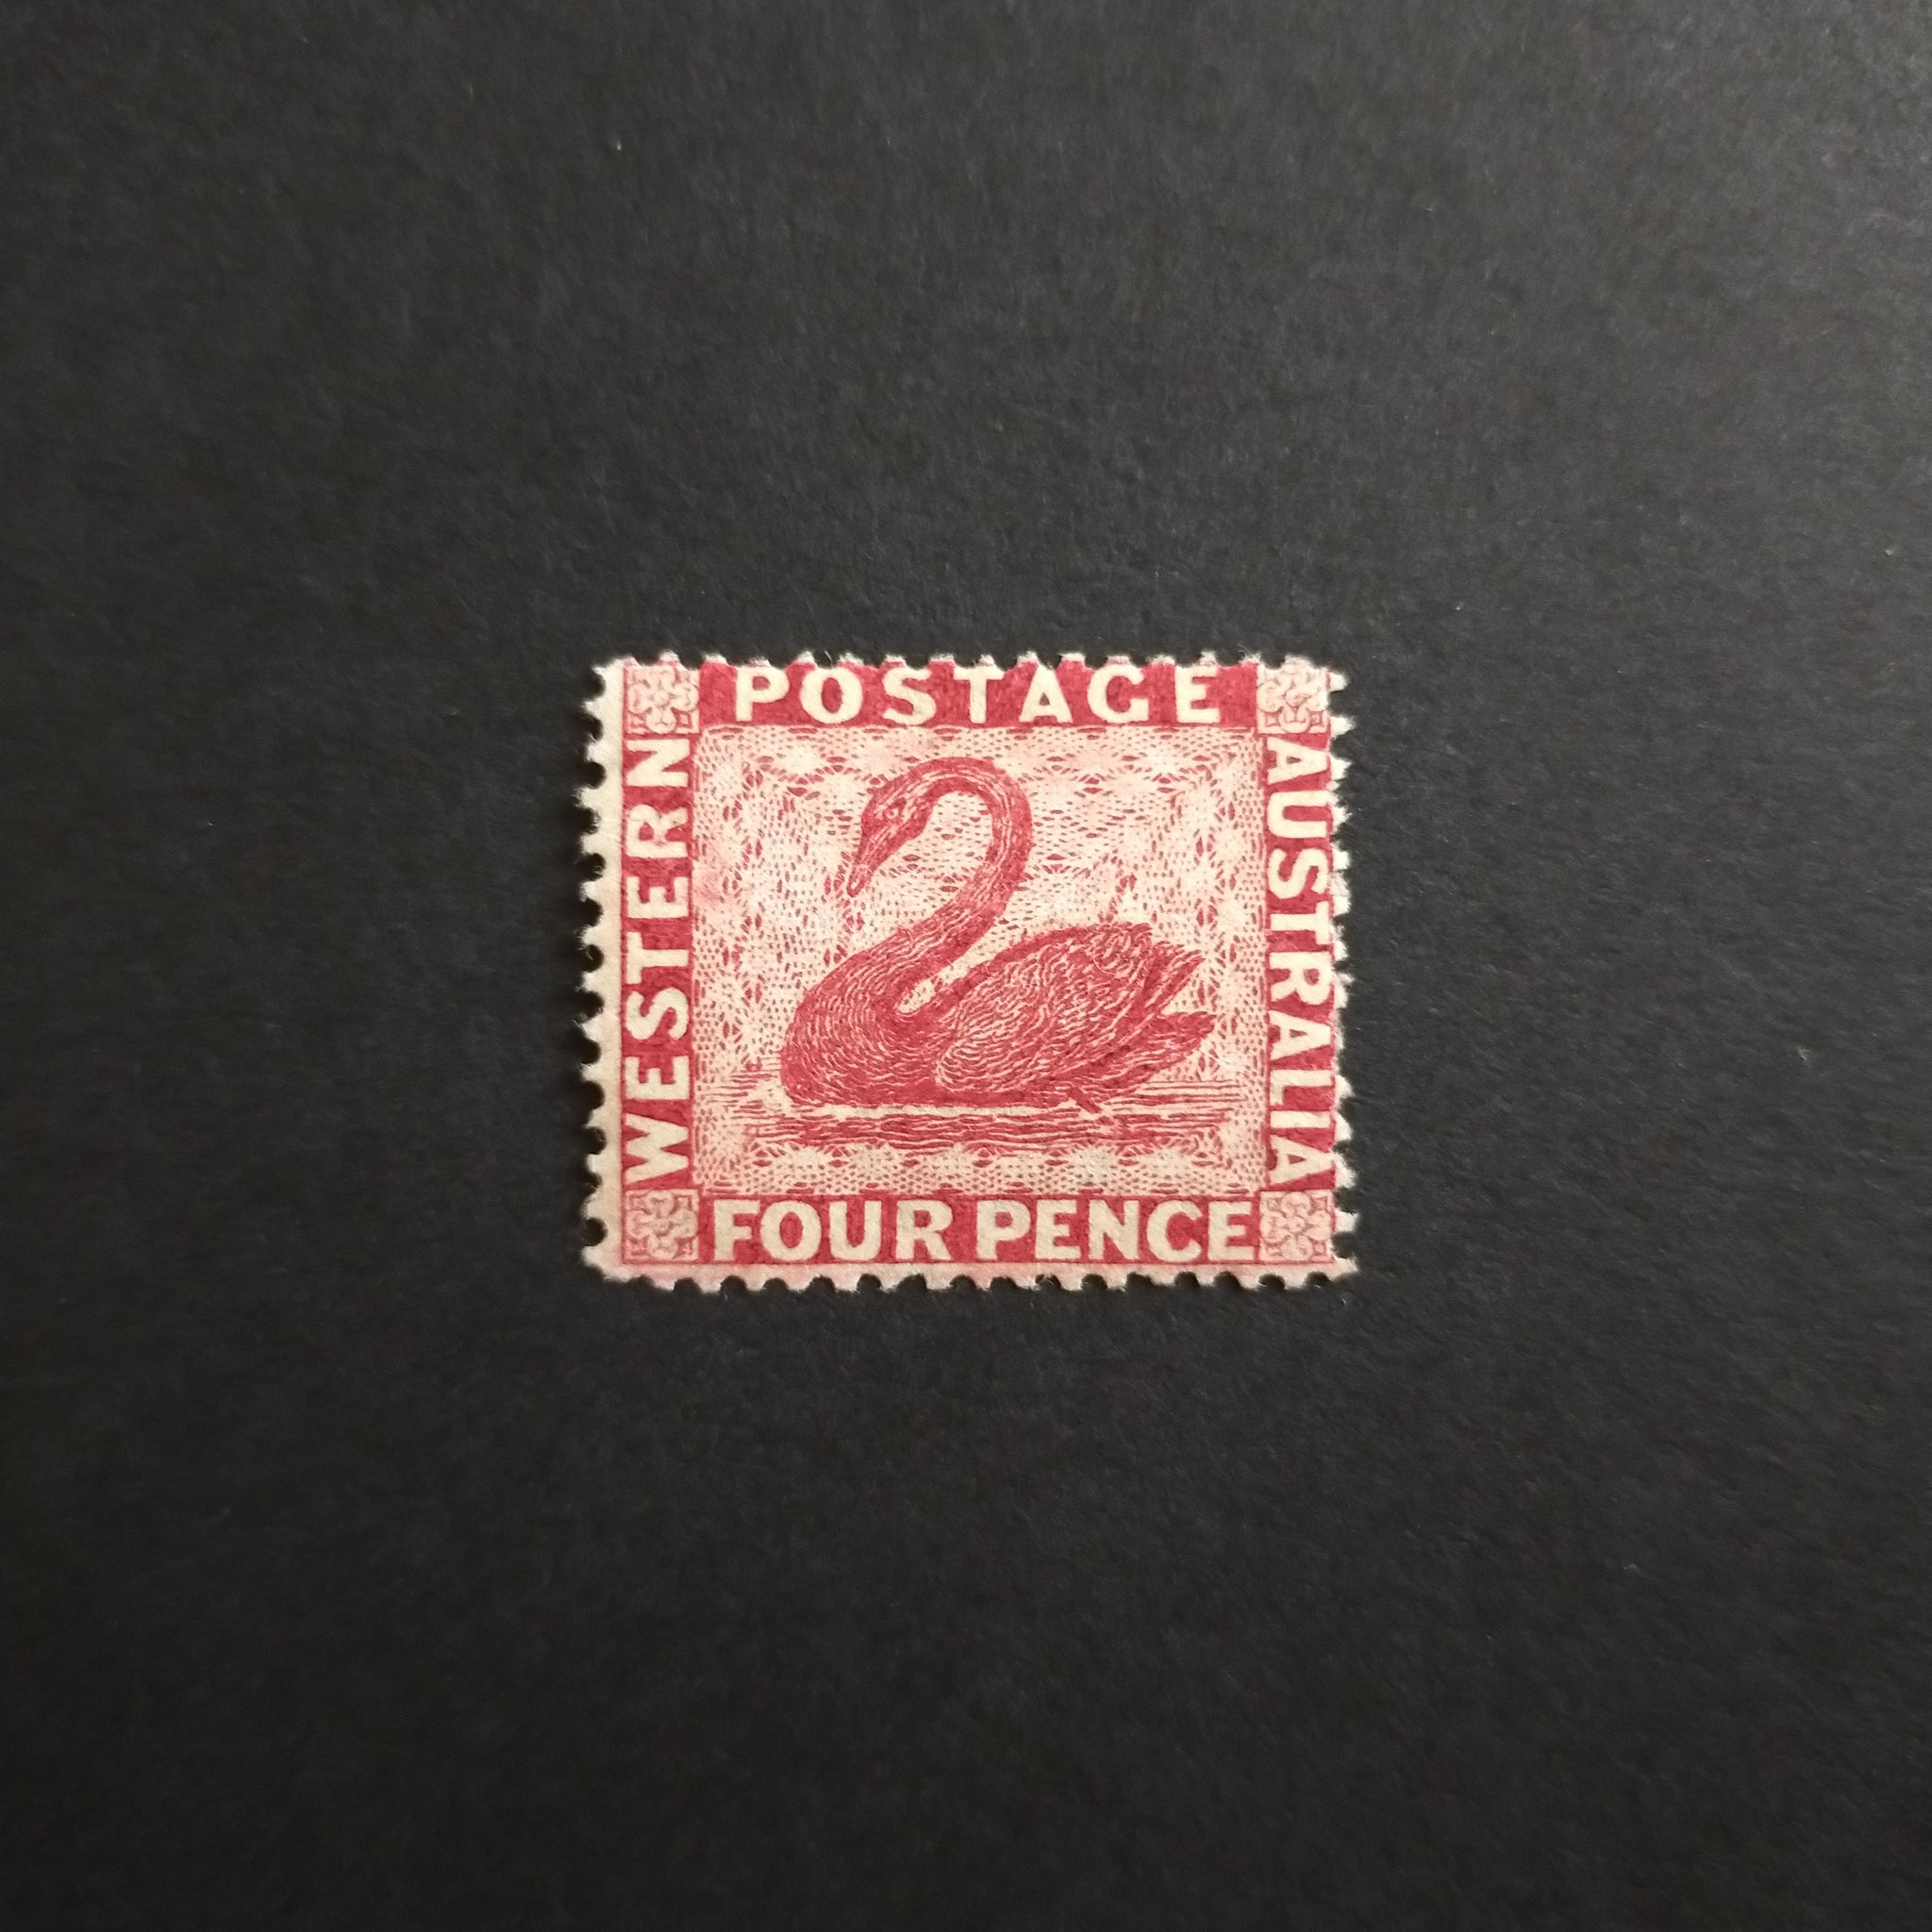 Western Australia SG 78 1882 4d Carmine Swan Stamp Fine Mint Unhinged